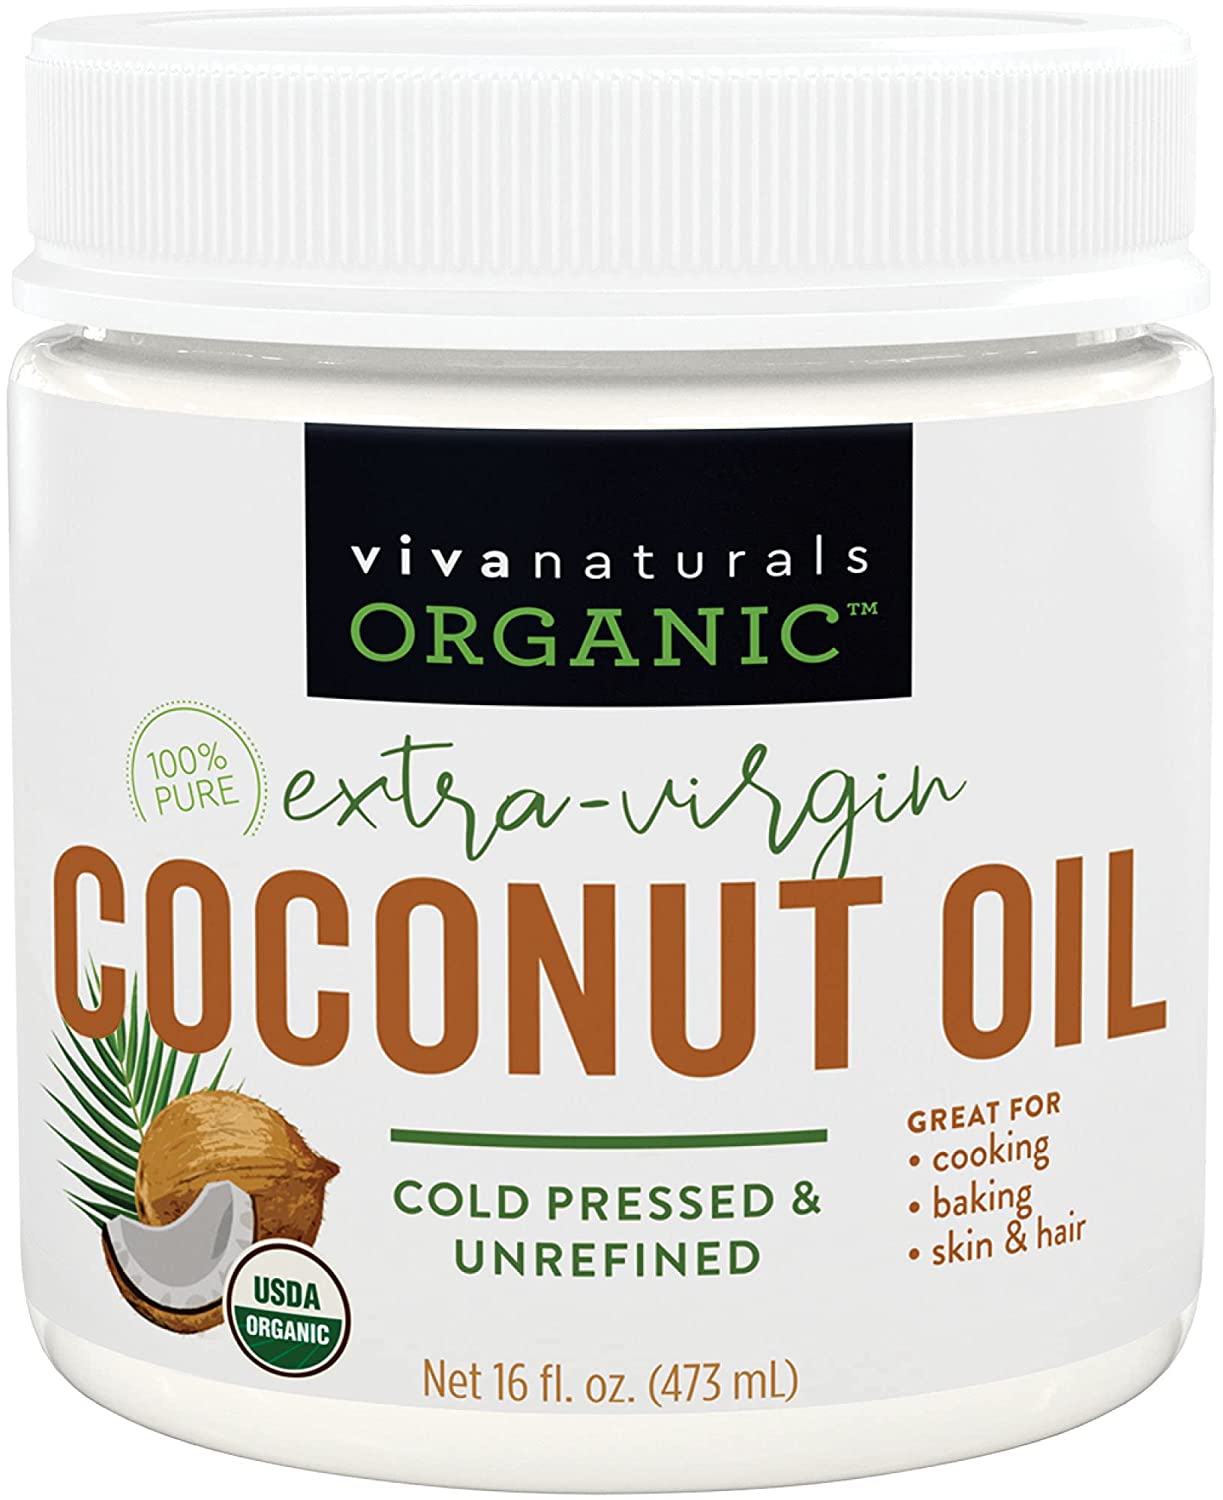 Viva Naturals Organic Non-GMO Extra Virgin Coconut Oil